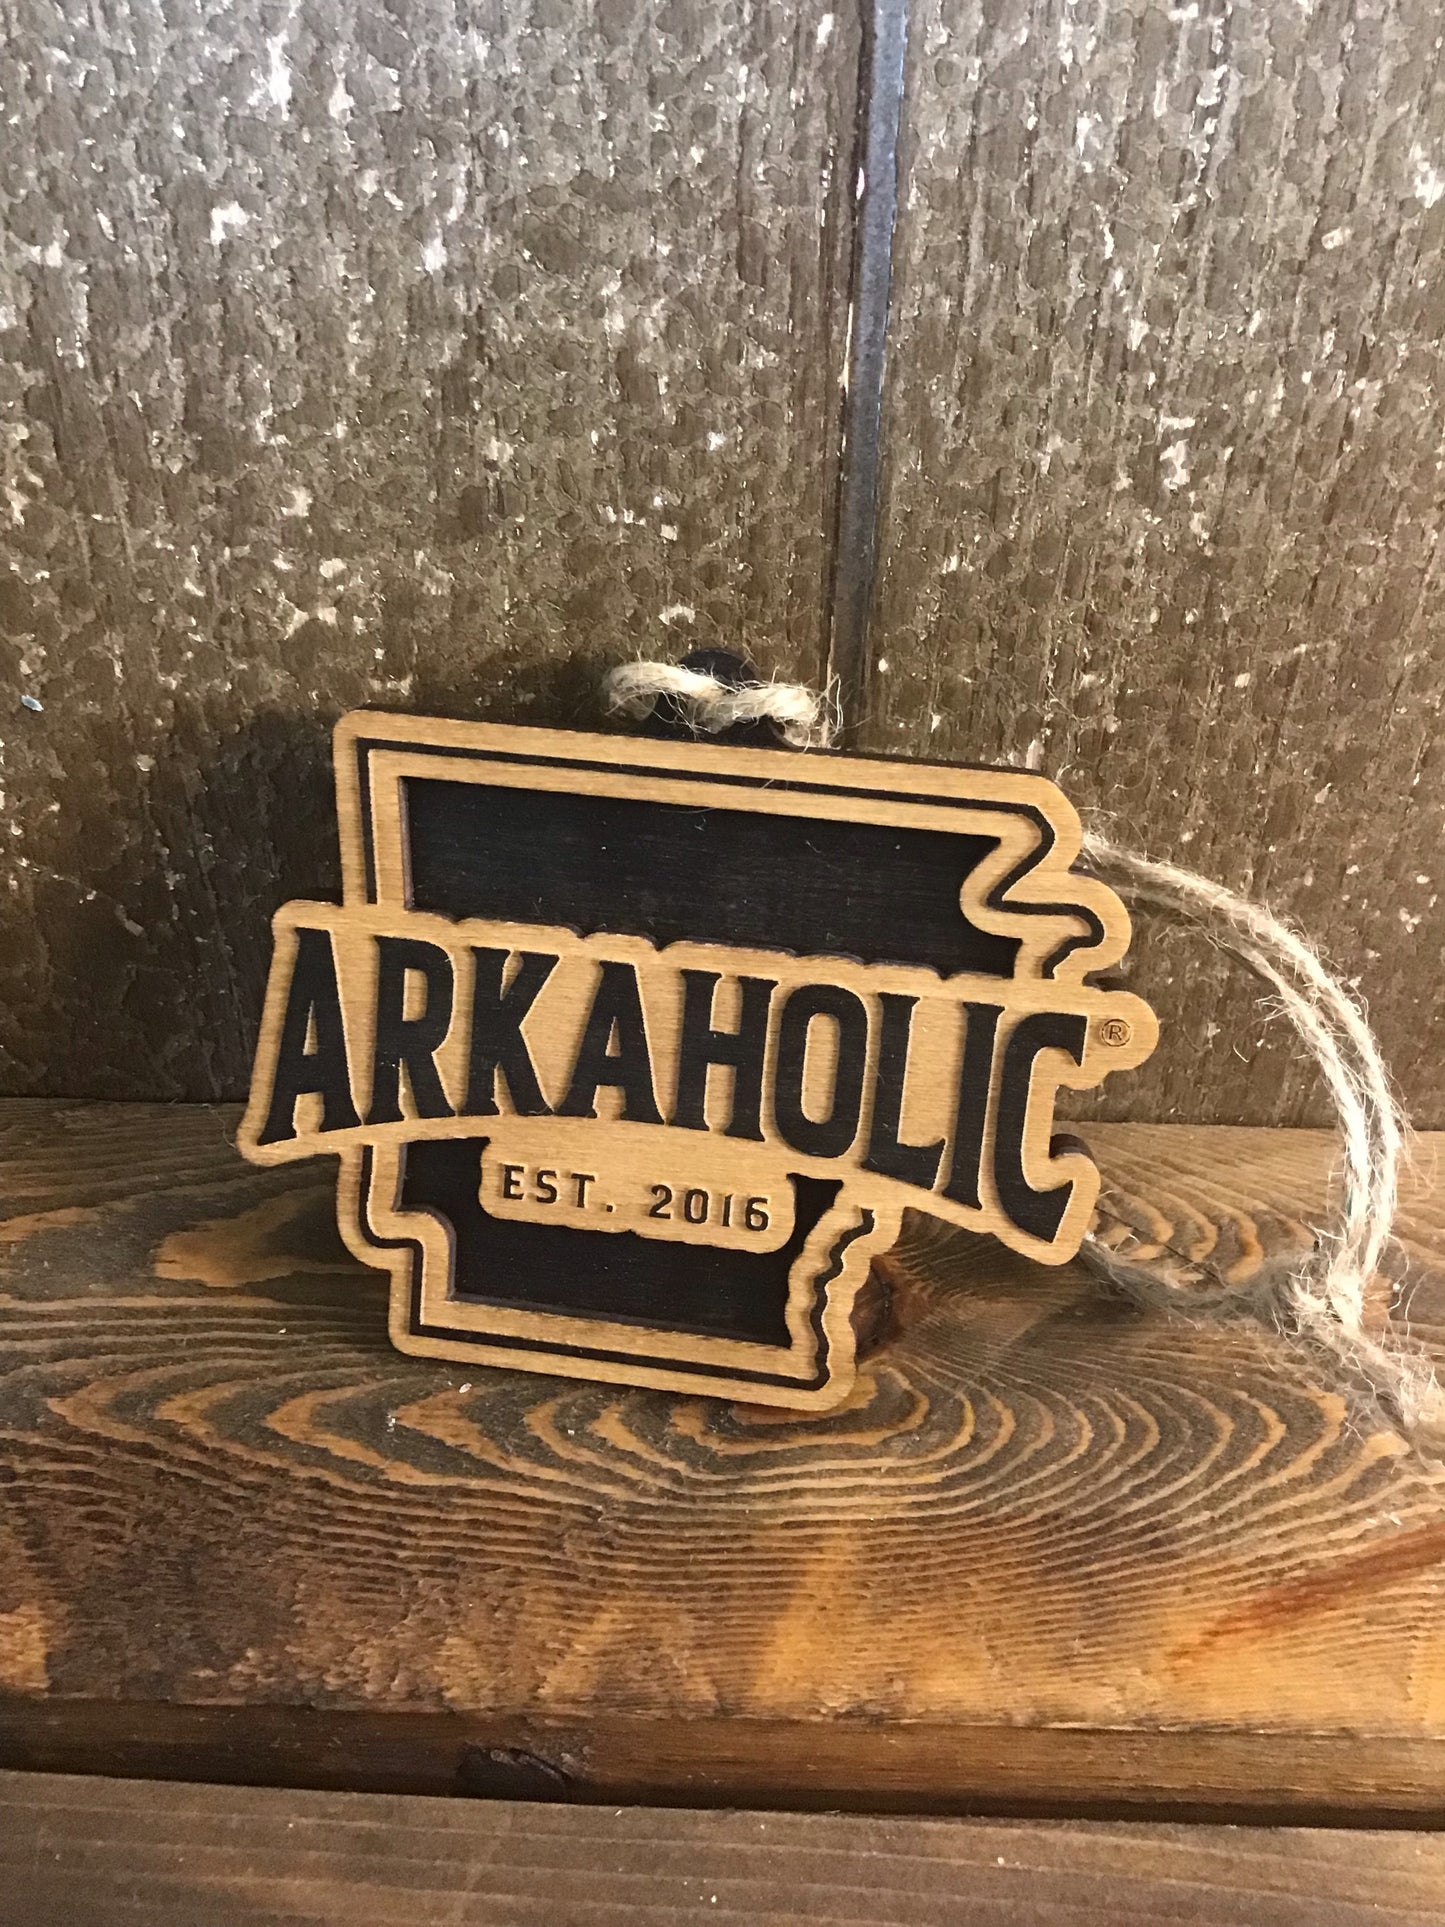 Arkaholic "Est 2016" state tag